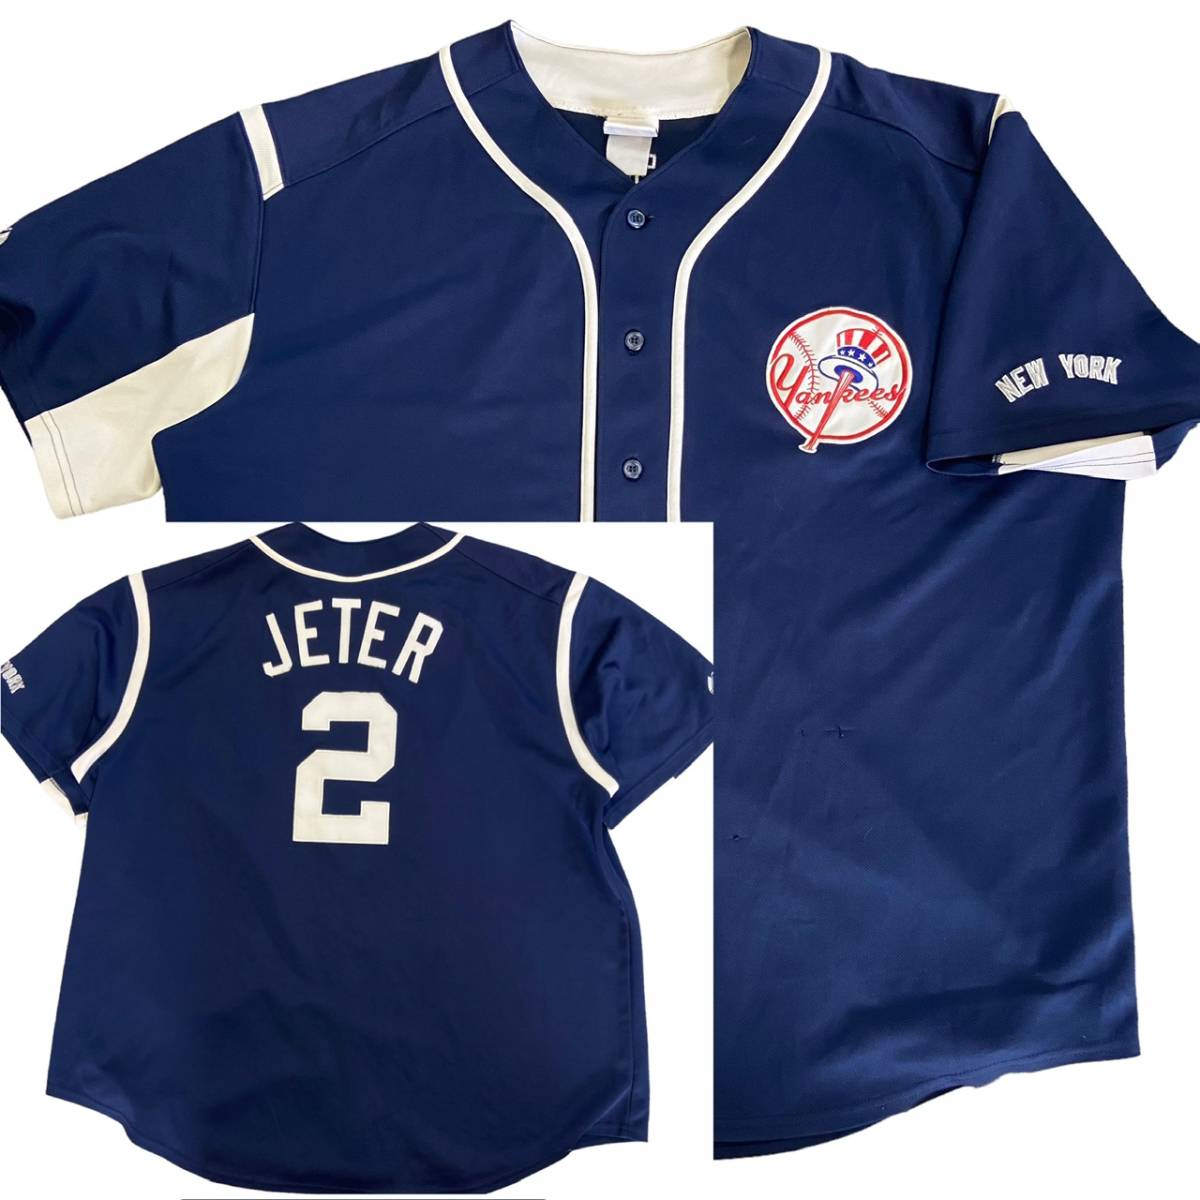 New York Yankees ヤンキース ベースボールシャツ MLB ニューヨーク JETER 2 majestic ユニフォーム ナンバリング 半袖 ゲームシャツ